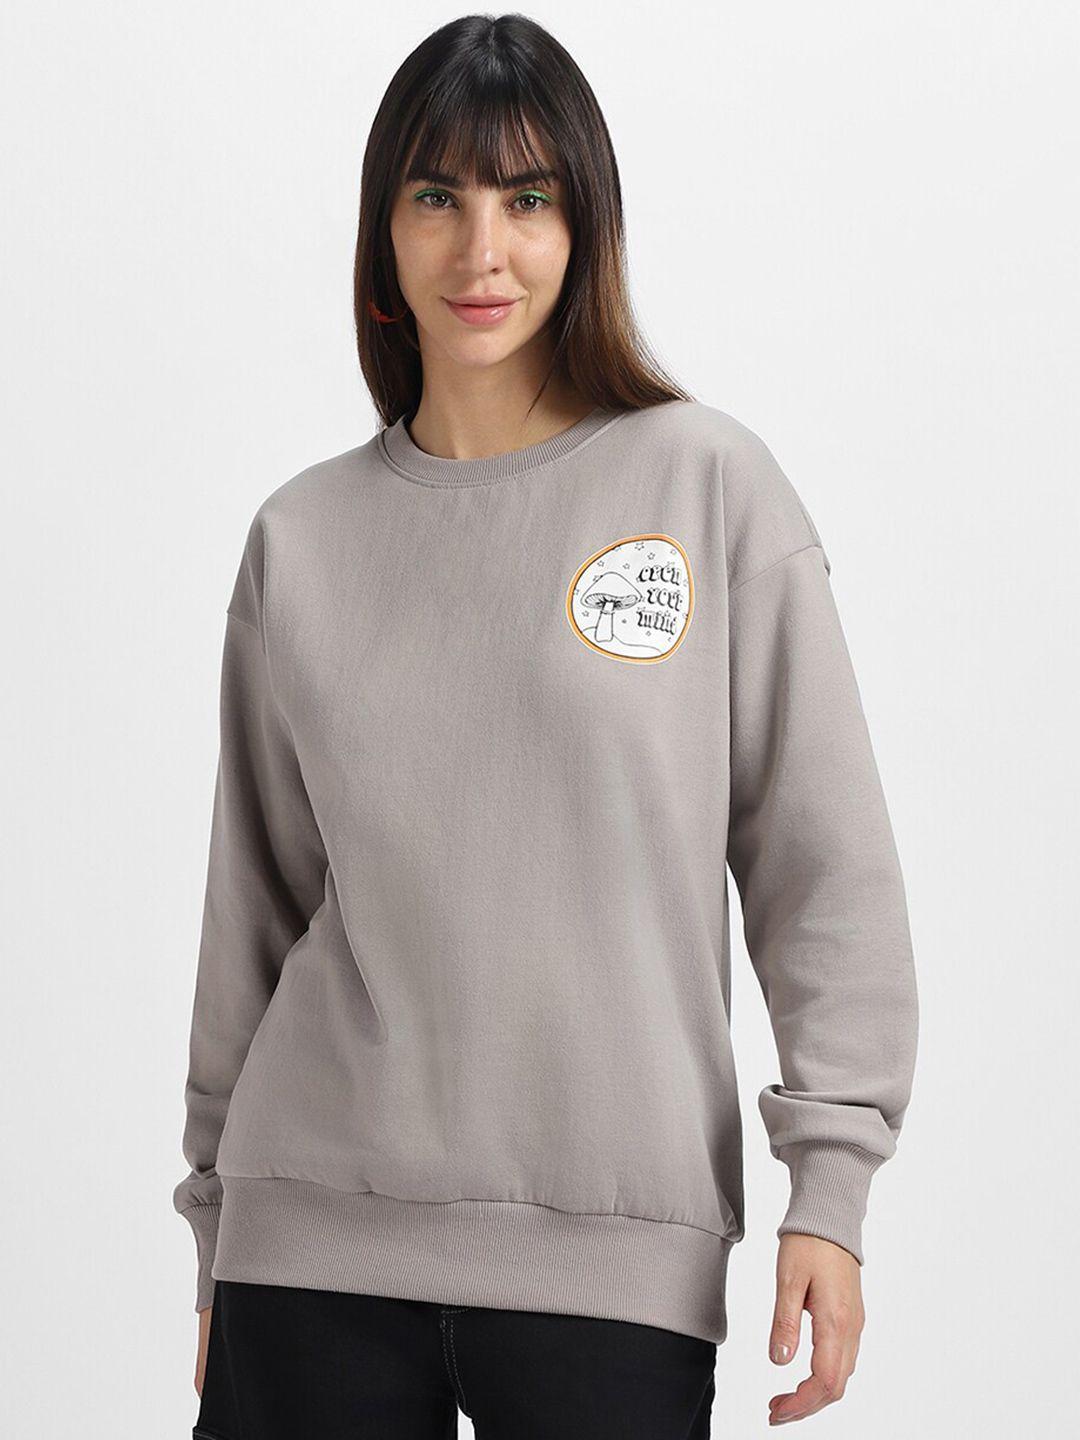 juneberry-graphic-printed-fleece-oversized-pullover-sweatshirt